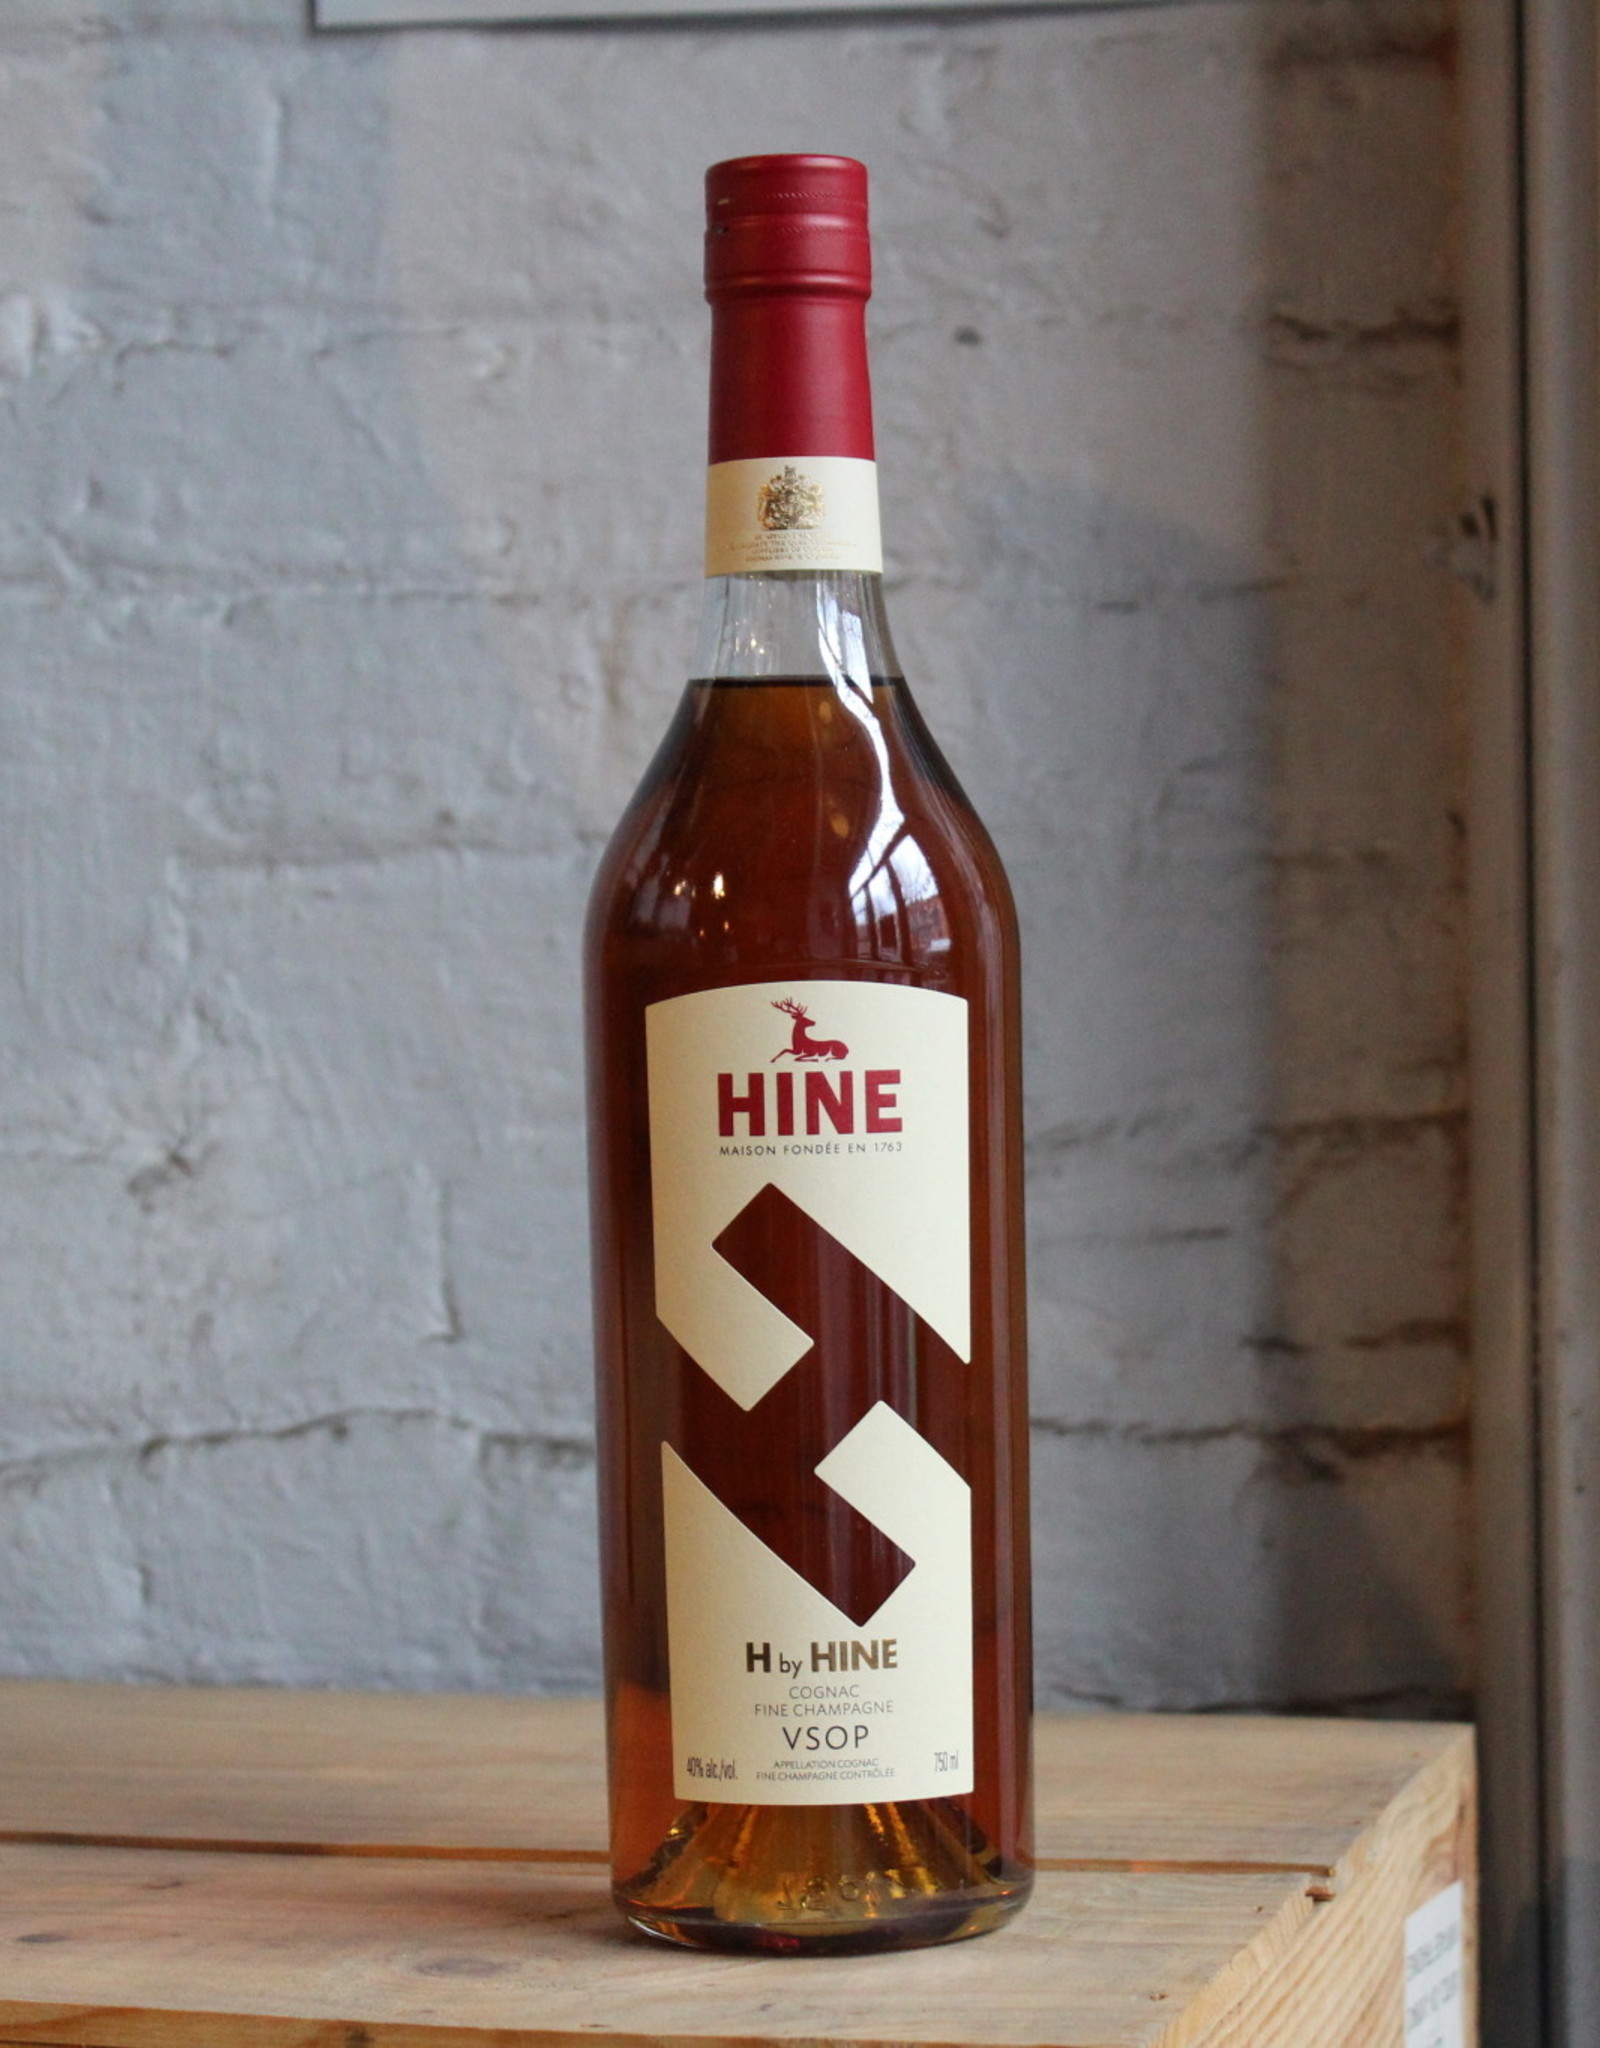 Hine Cognac 'H by Hine' - France (750ml)